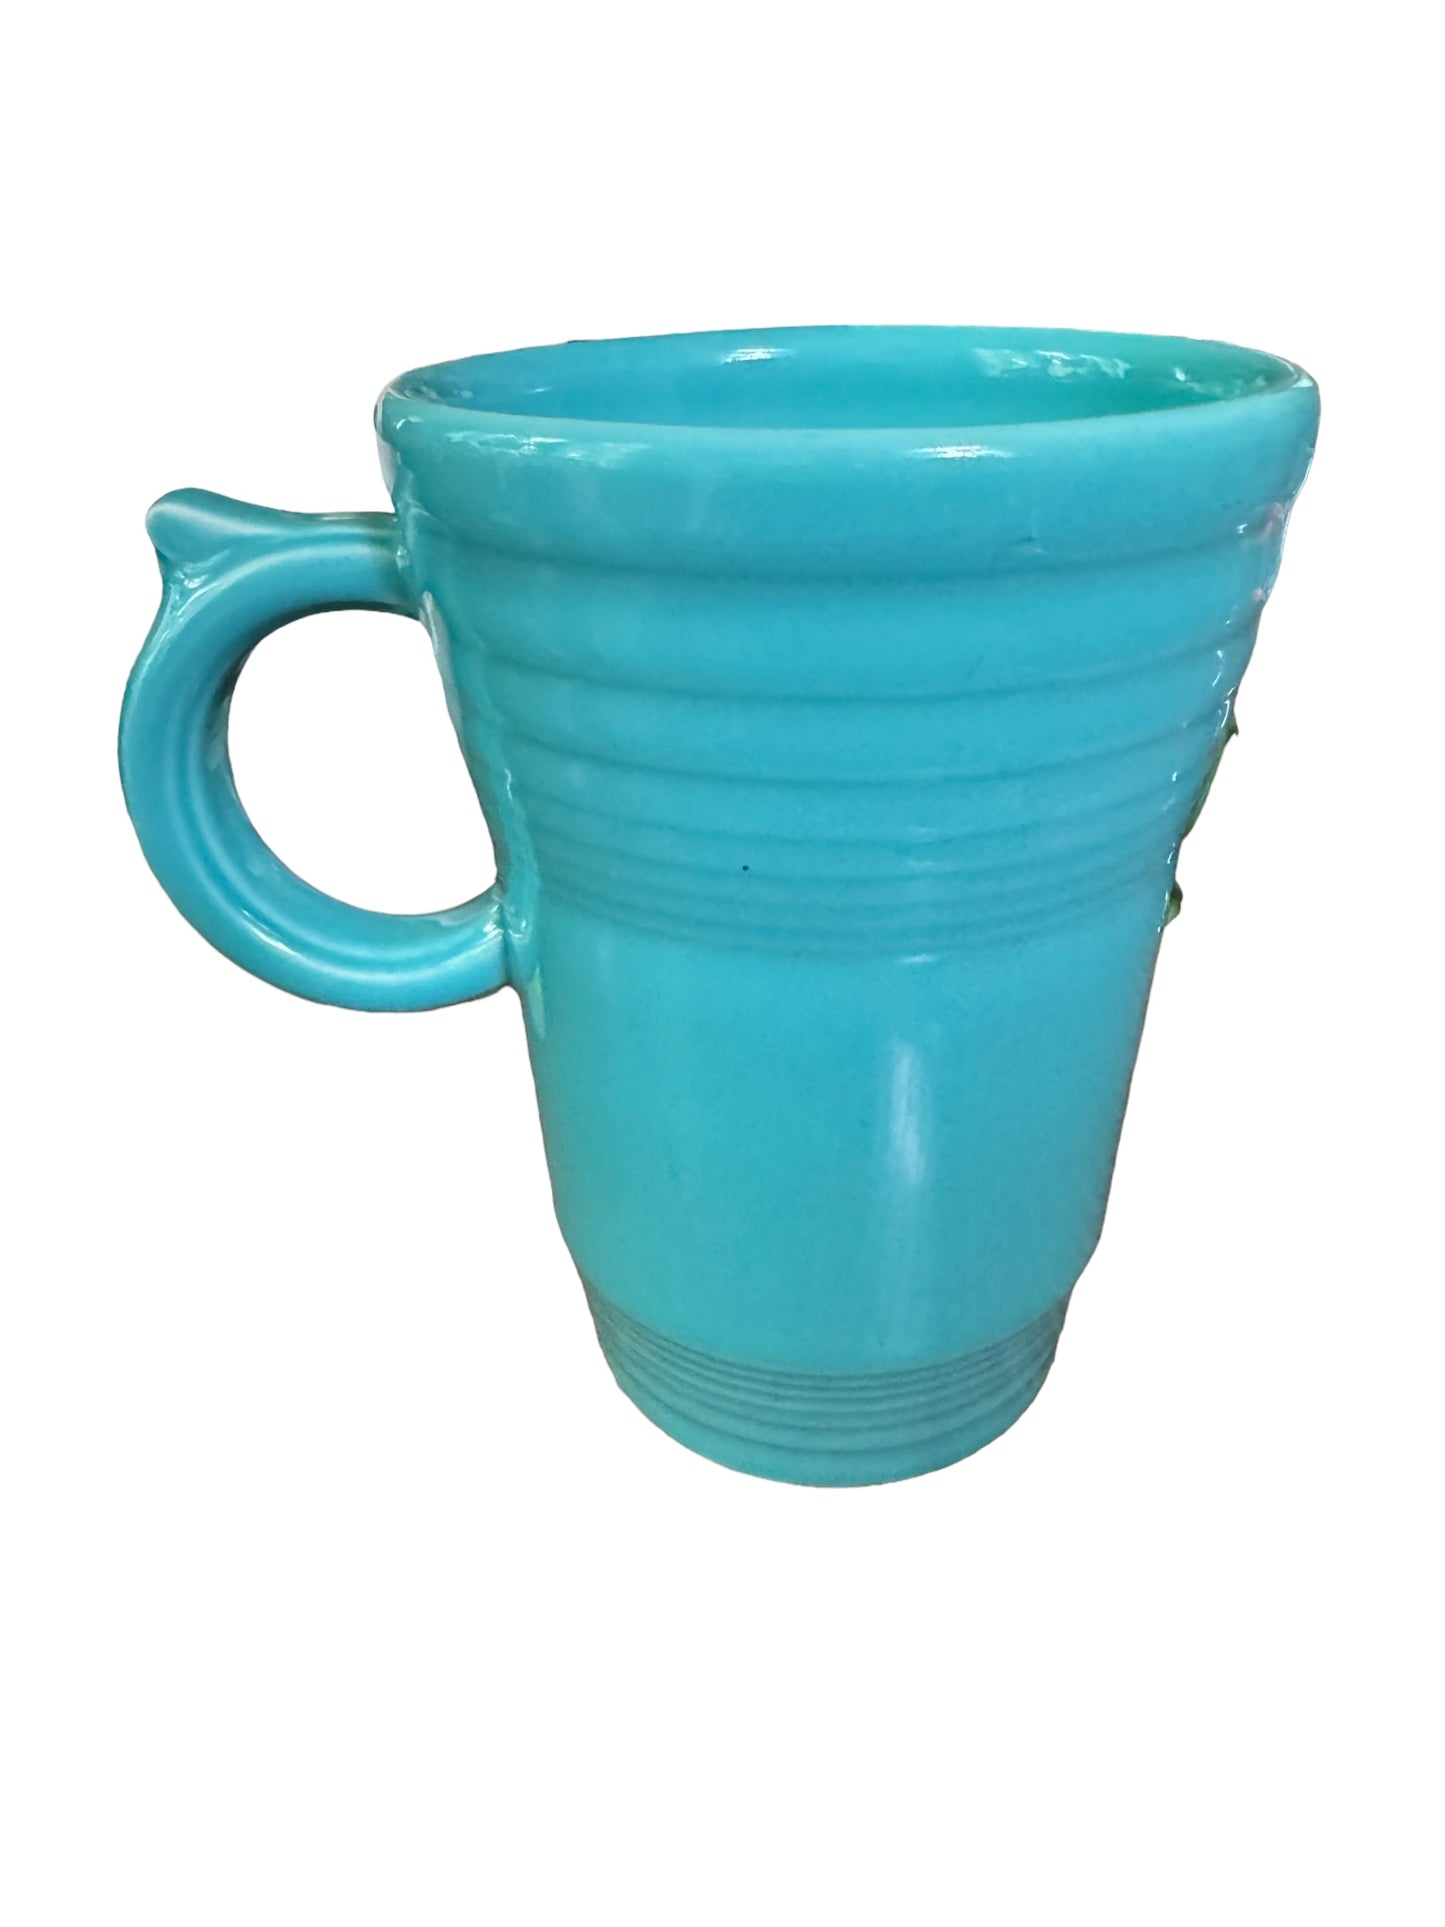 Fiesta Latte Mug in Turquoise (Kohls Exclusive)1st